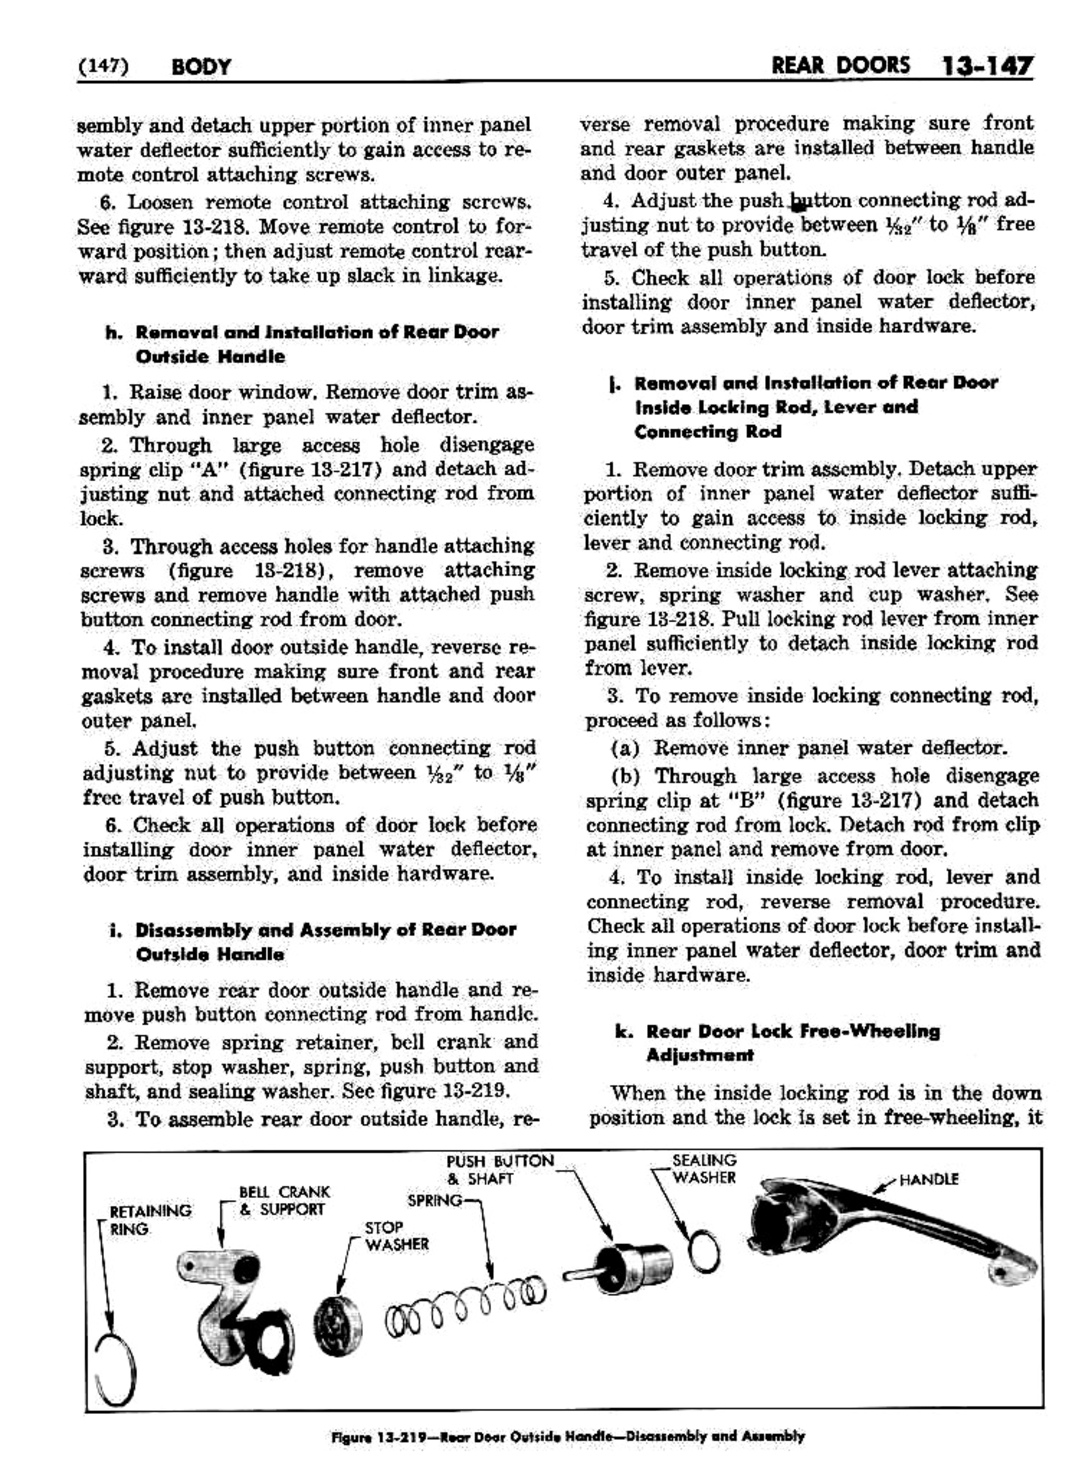 n_1958 Buick Body Service Manual-148-148.jpg